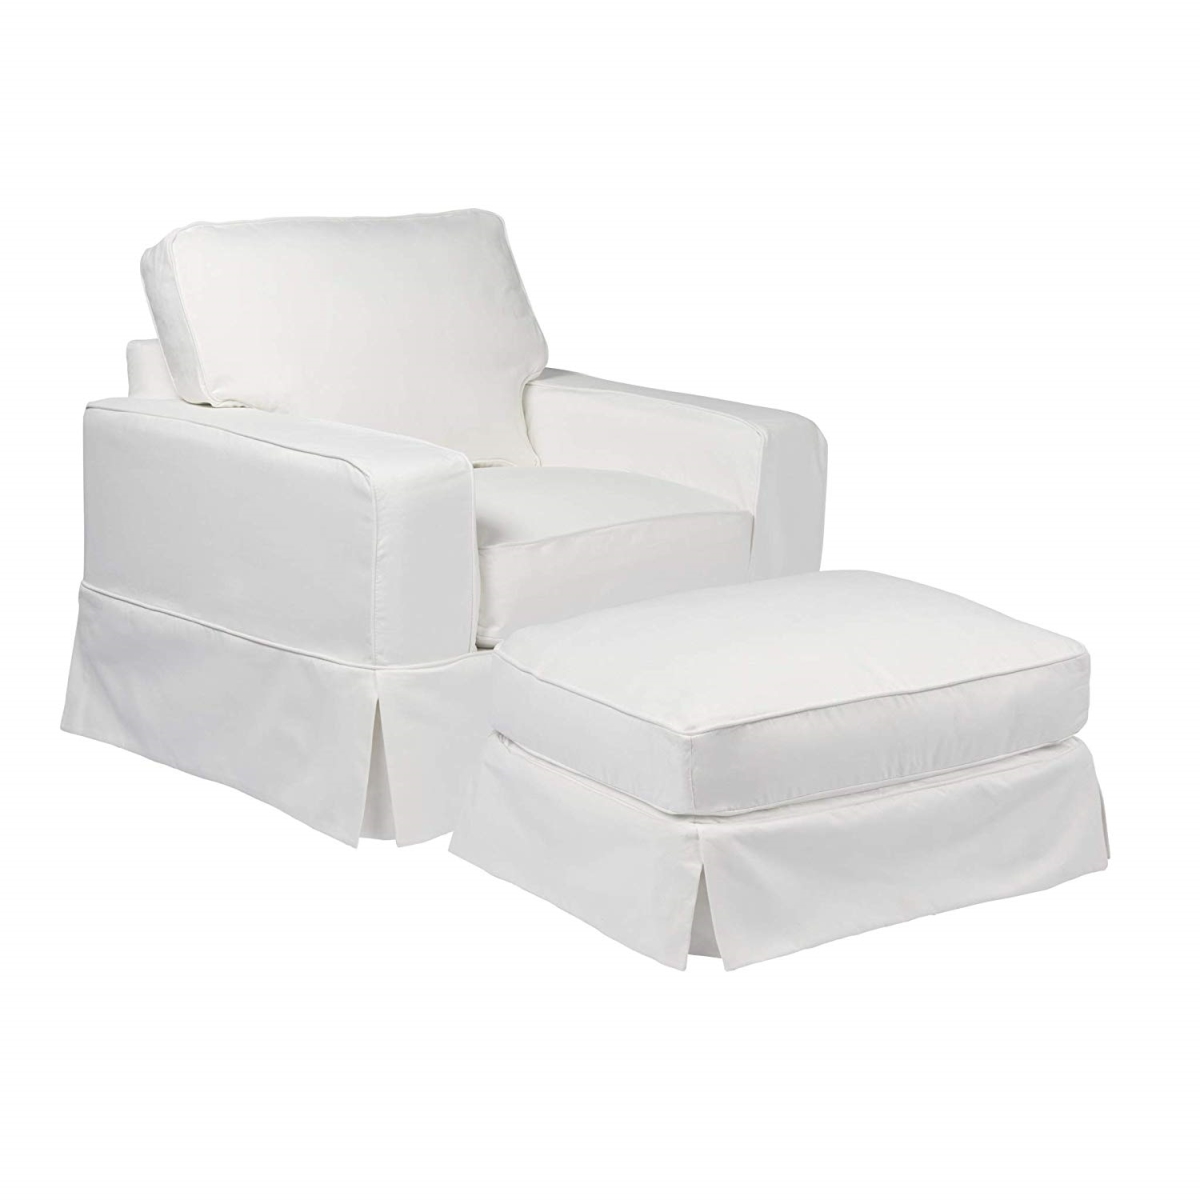 Su-108520sc-30-391081 Americana Chair & Ottoman Slipcover Set - White